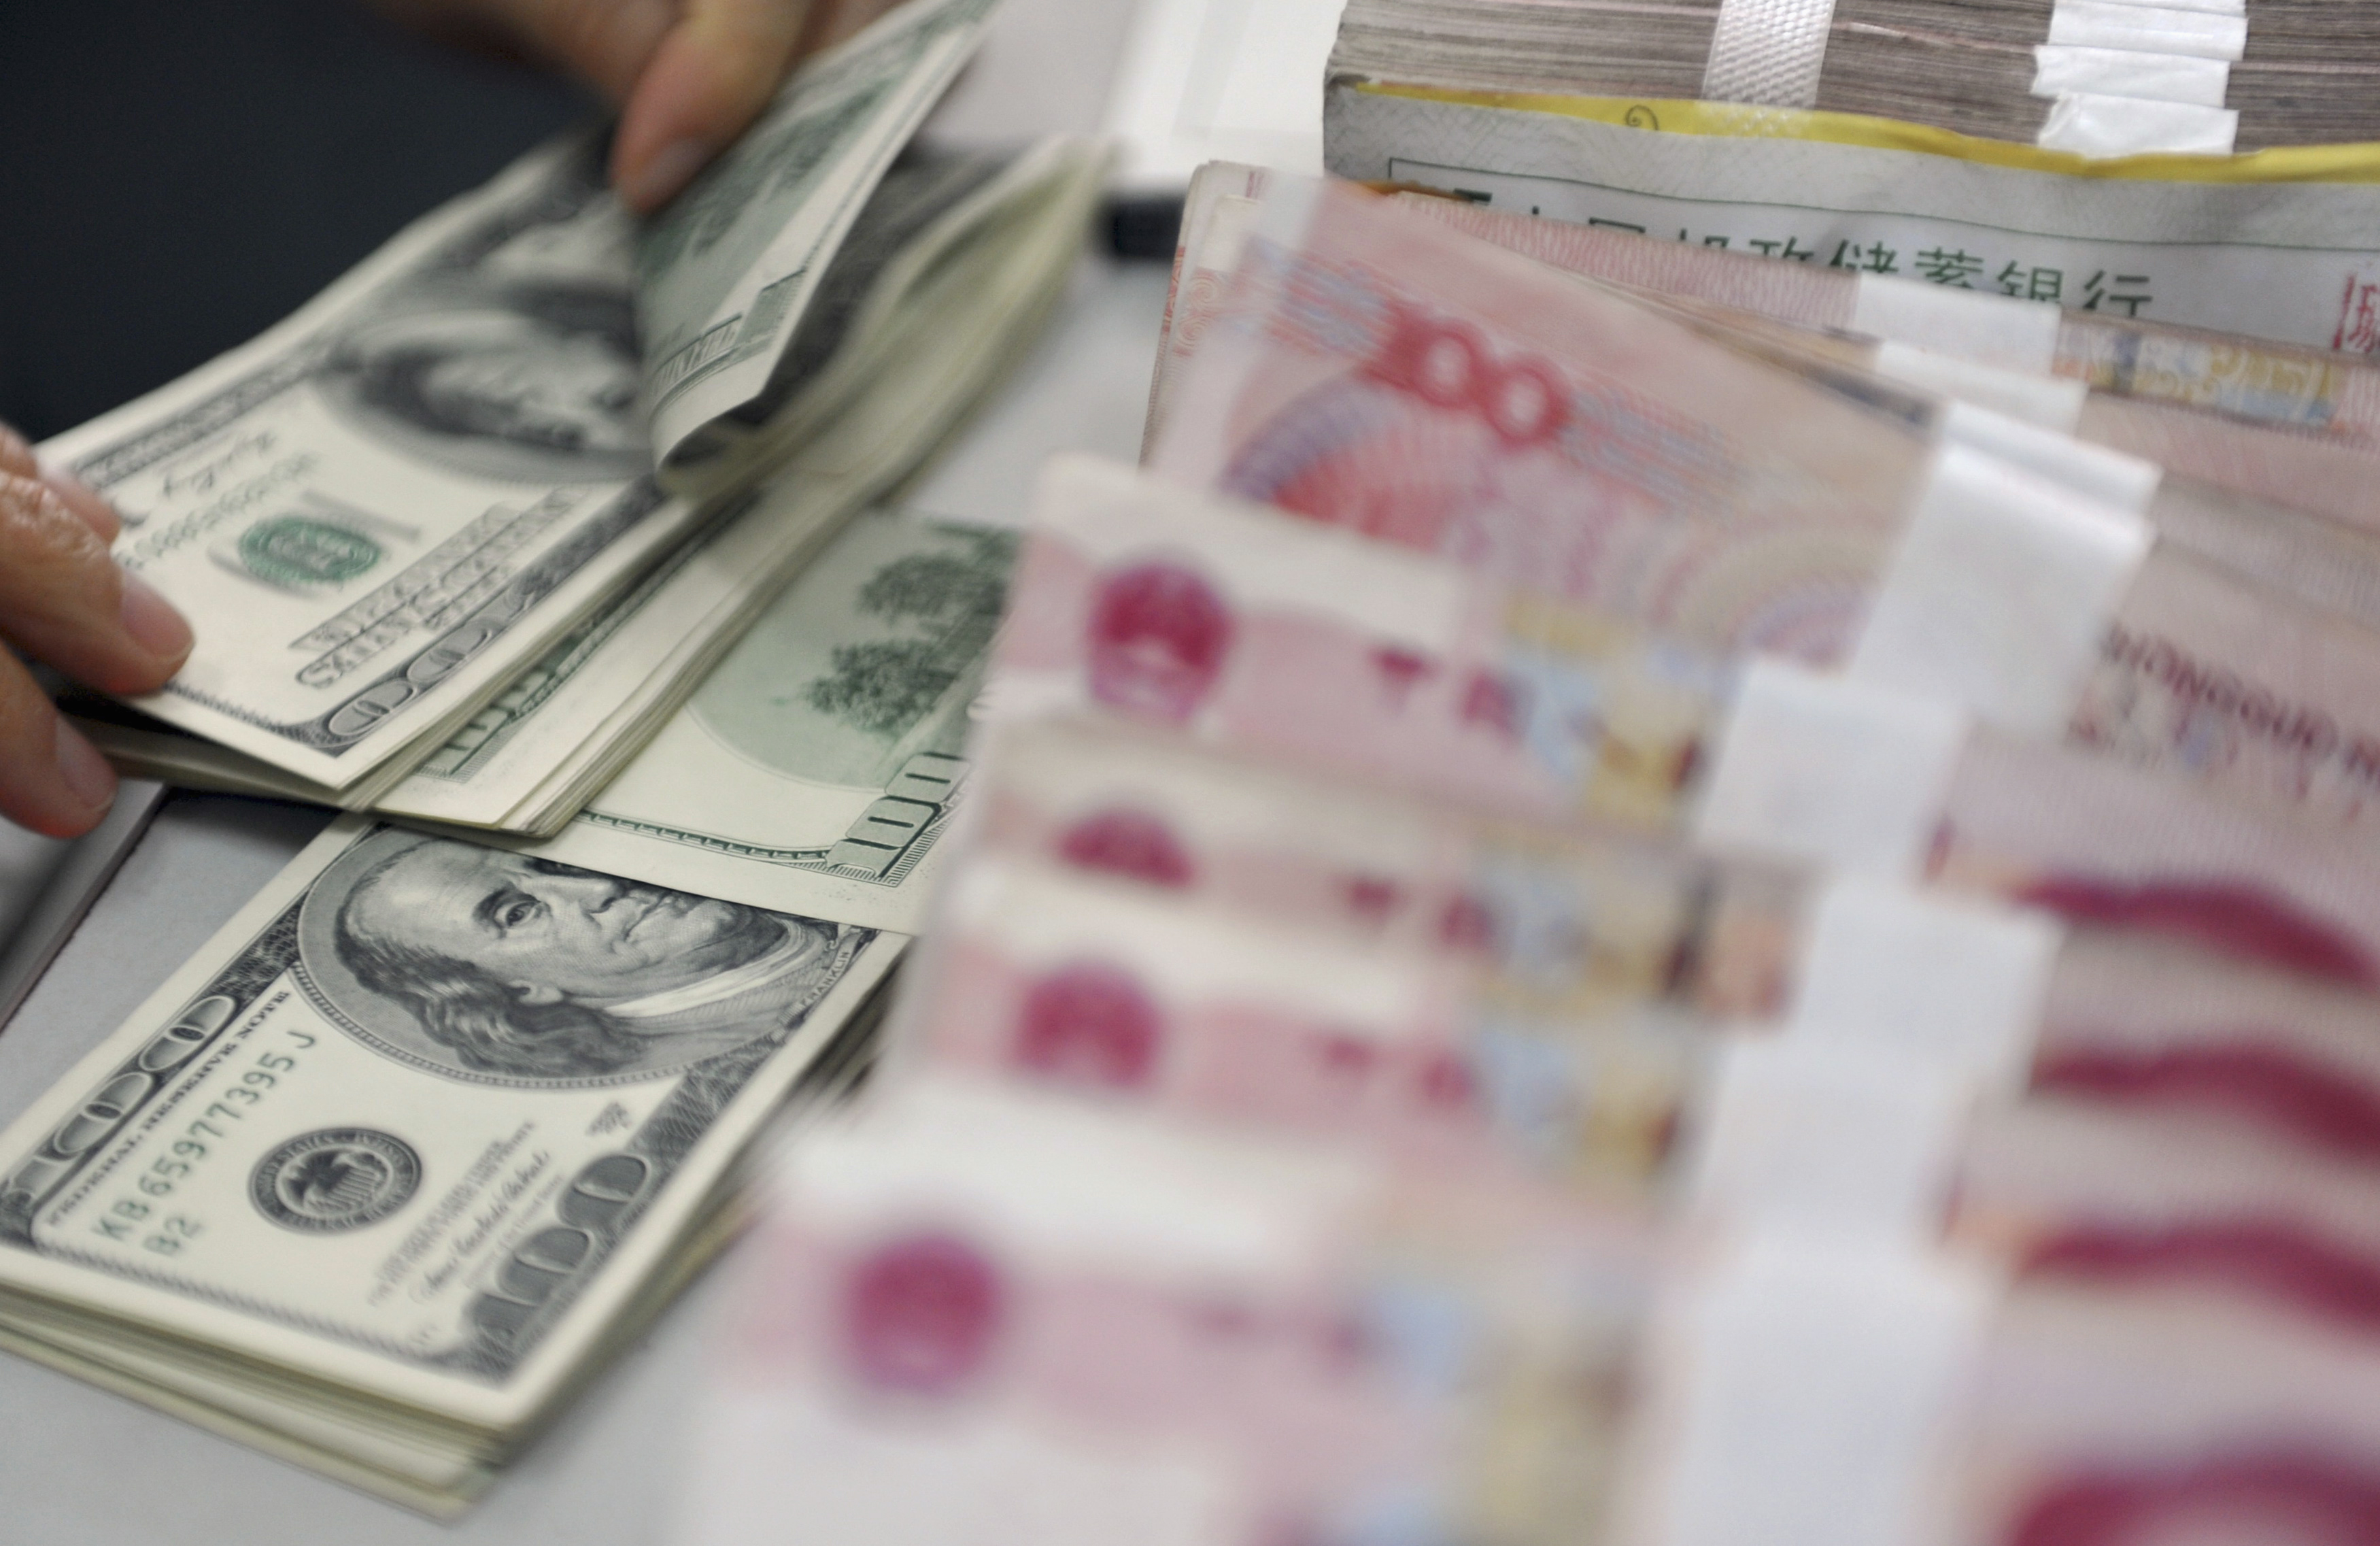 A clerk counts U.S. dollar banknotes after counting Chinese 100 Yuan banknotes at a branch of the Agricultural Bank of China in Qionghai, China's southmost Hainan province, November 12, 2012. (China Daily/Reuters)